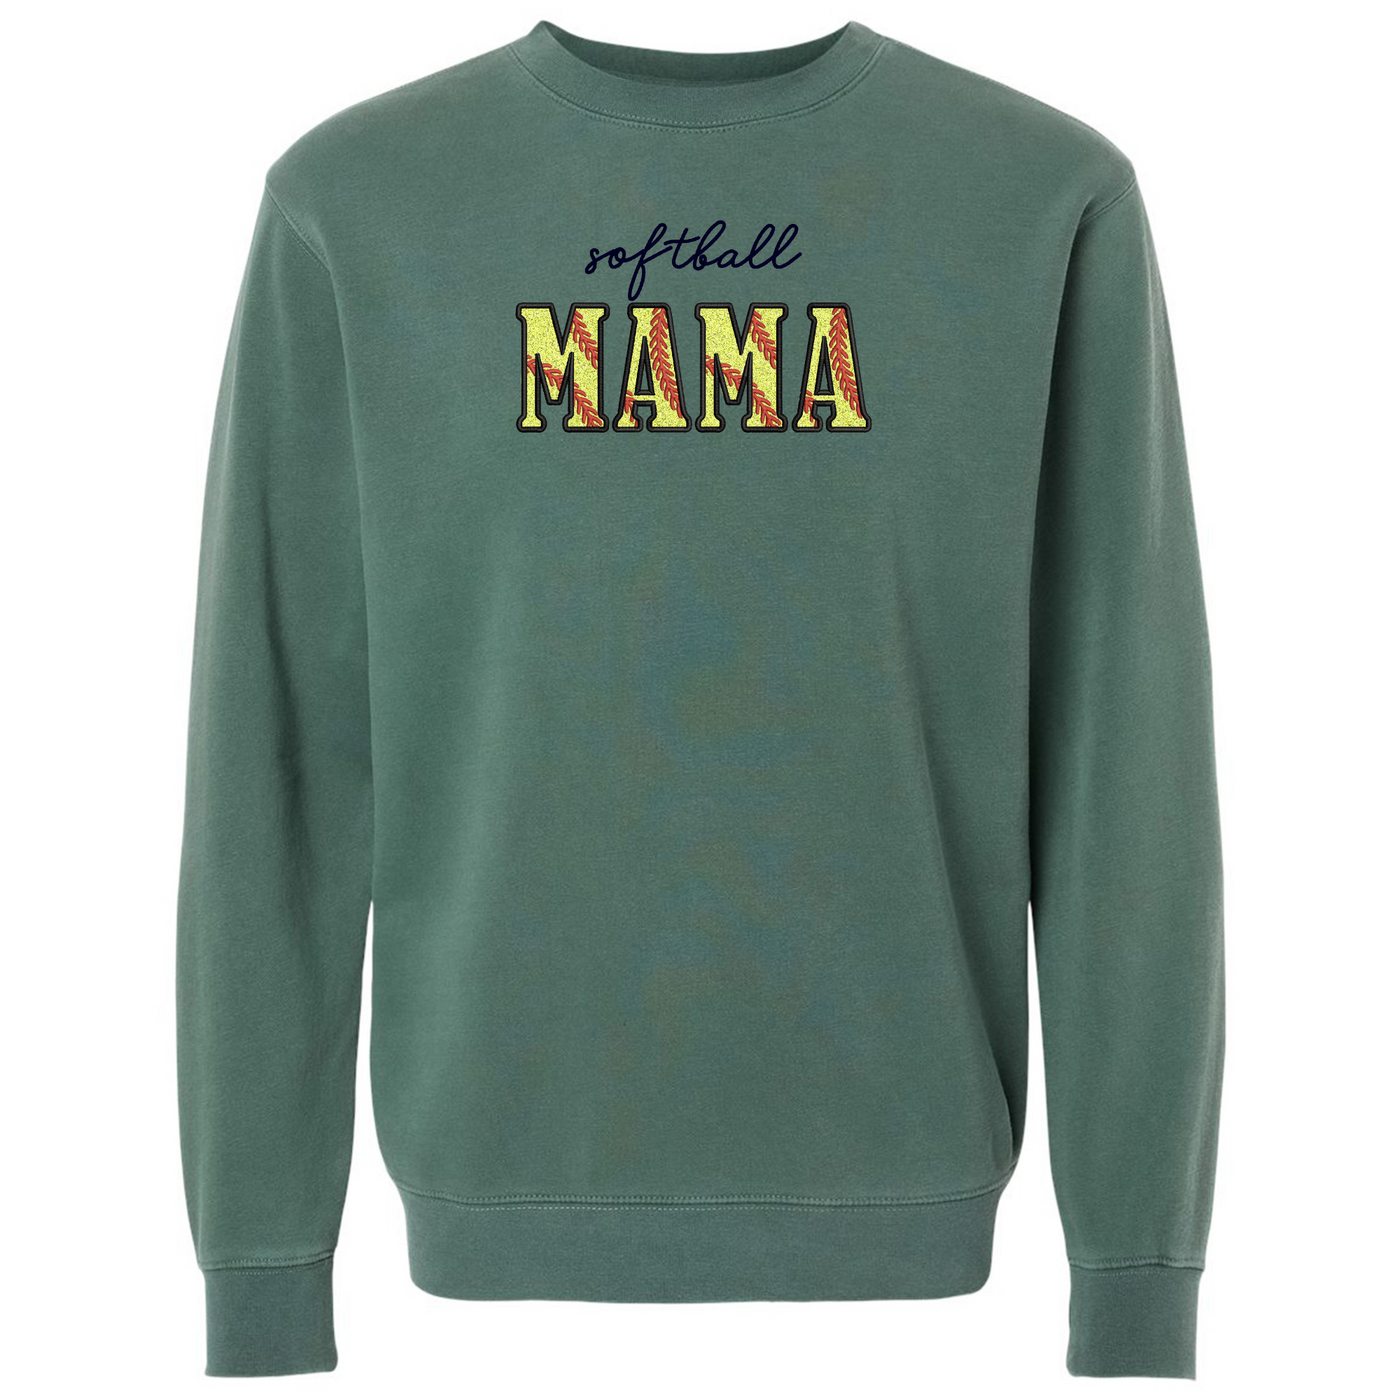 Glitter Embroidery 'Softball Mama/Mom' Cozy Crew